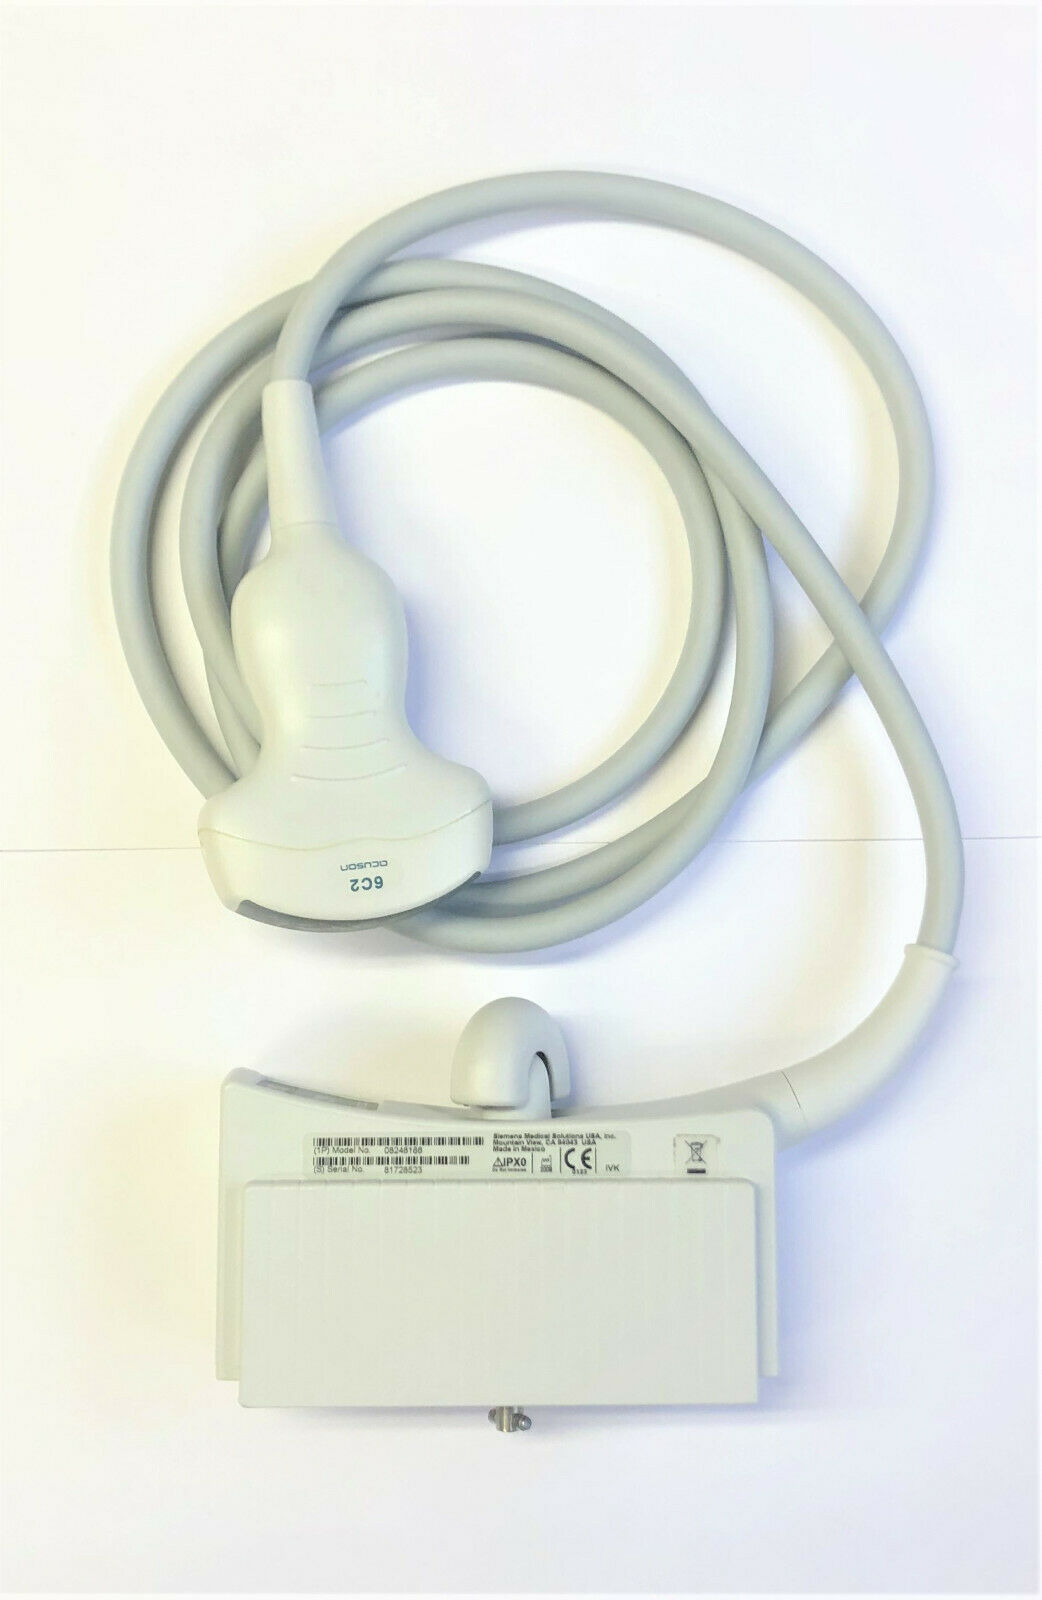 Siemens Acuson, 6C2, 08248186, Convex Ultrasound Transducer Probe DIAGNOSTIC ULTRASOUND MACHINES FOR SALE